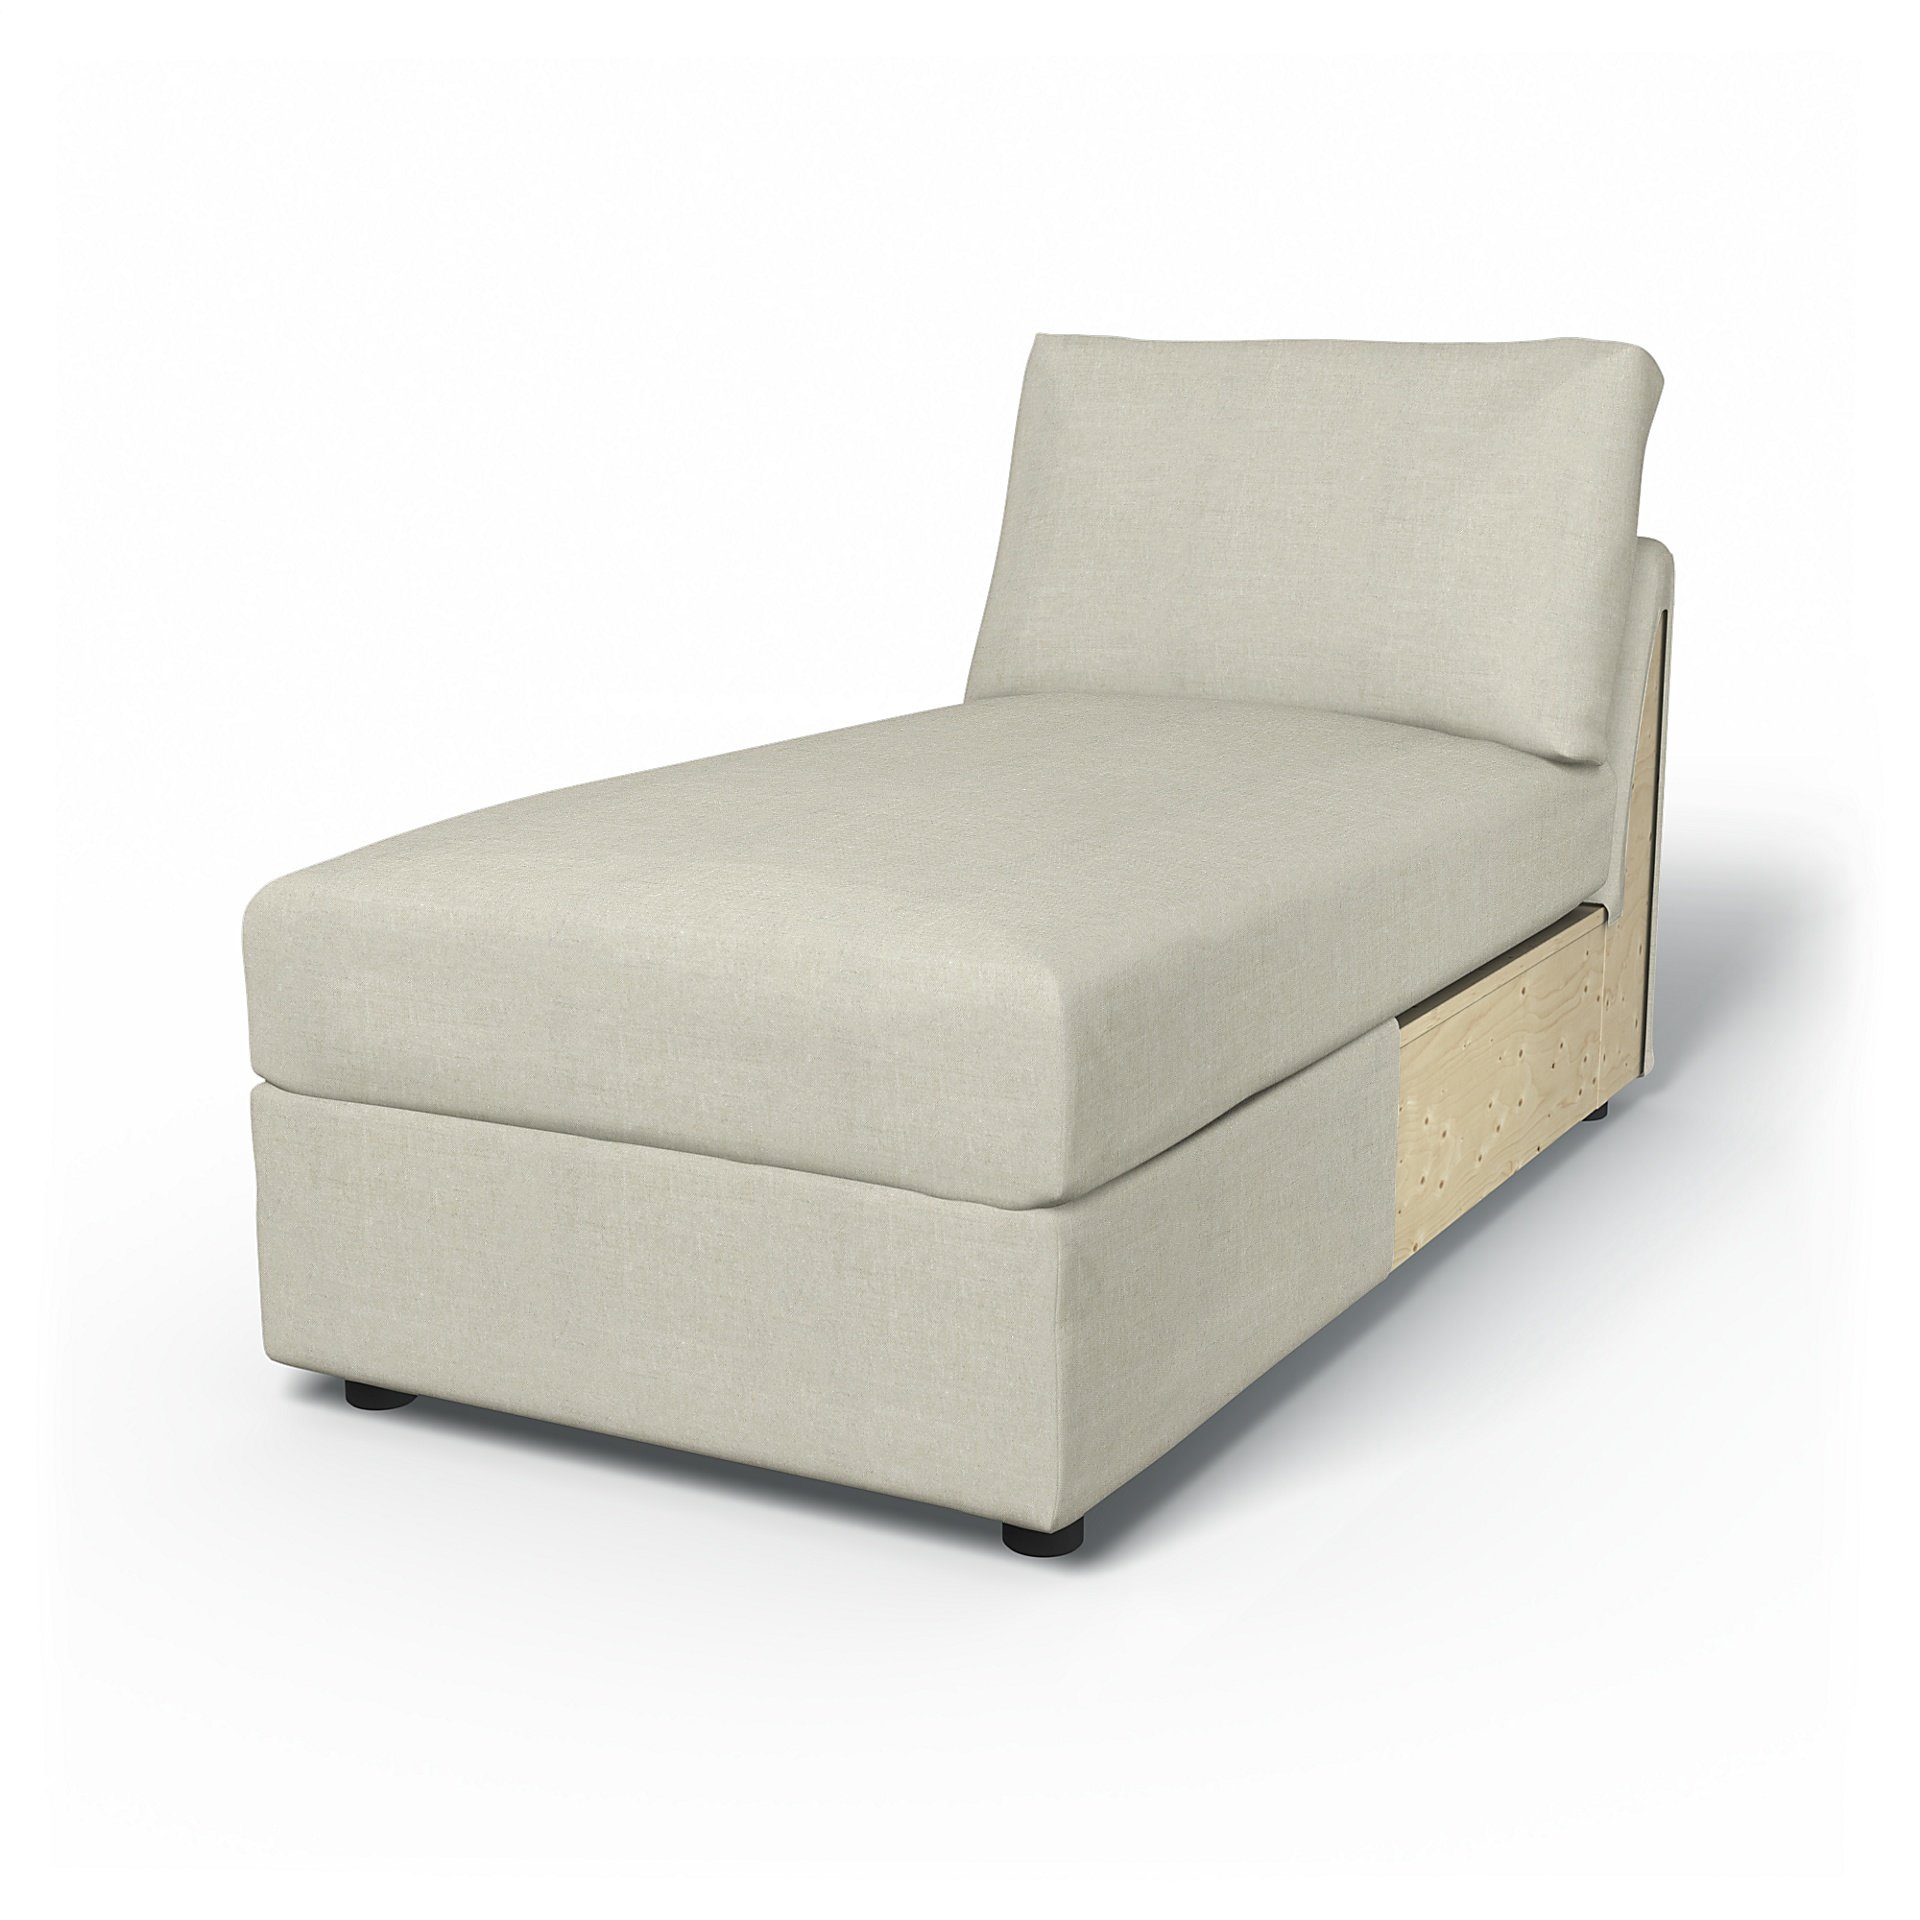 IKEA - Vimle Chaise Longue Cover, Natural, Linen - Bemz